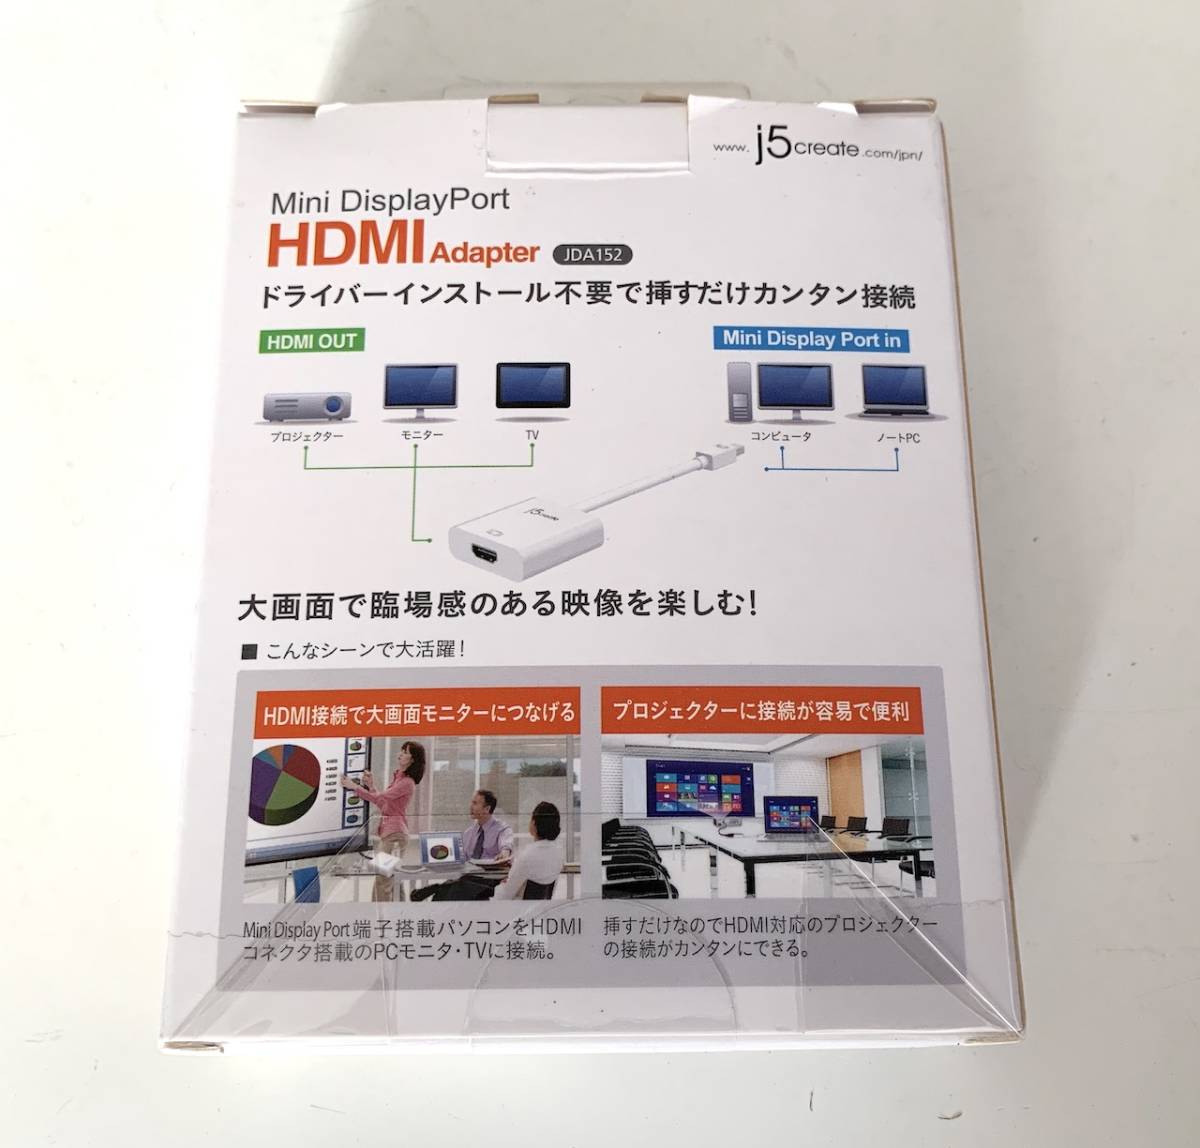 J5Create 加賀ハイテック JDA152 Mini DisplayPort HDMI Adapter 送料込み_画像2